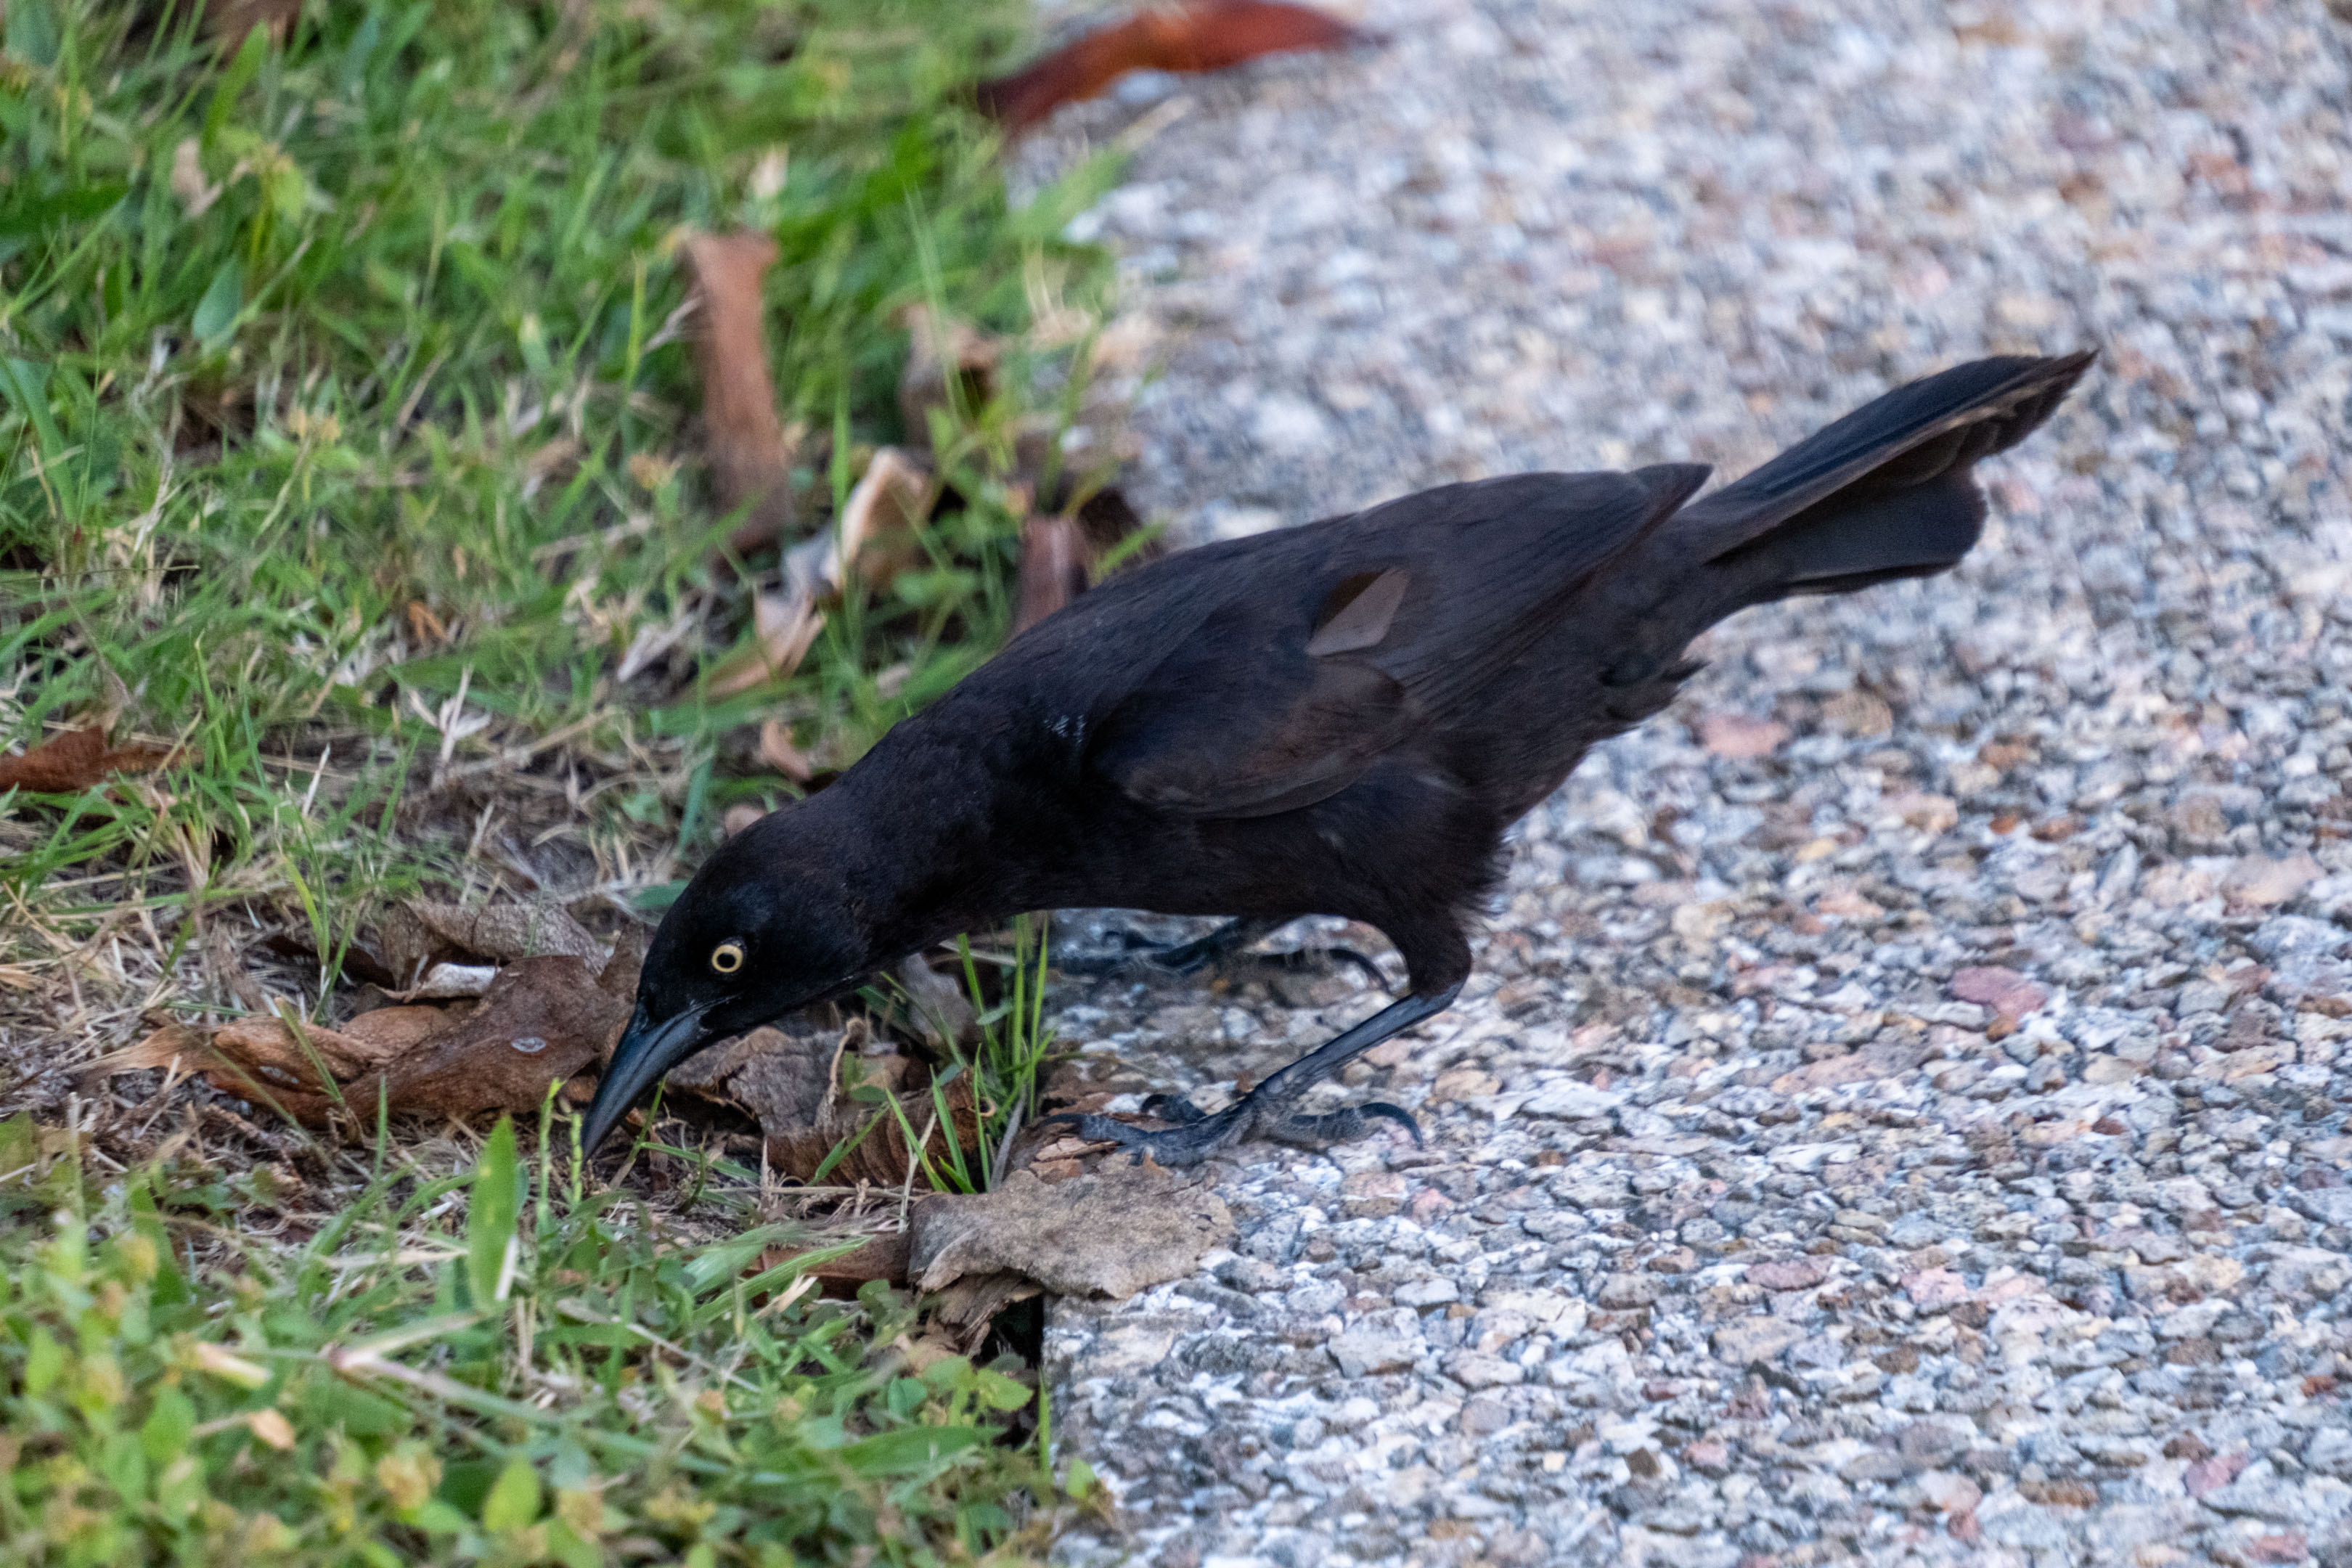 a black chango seeking food on the grass